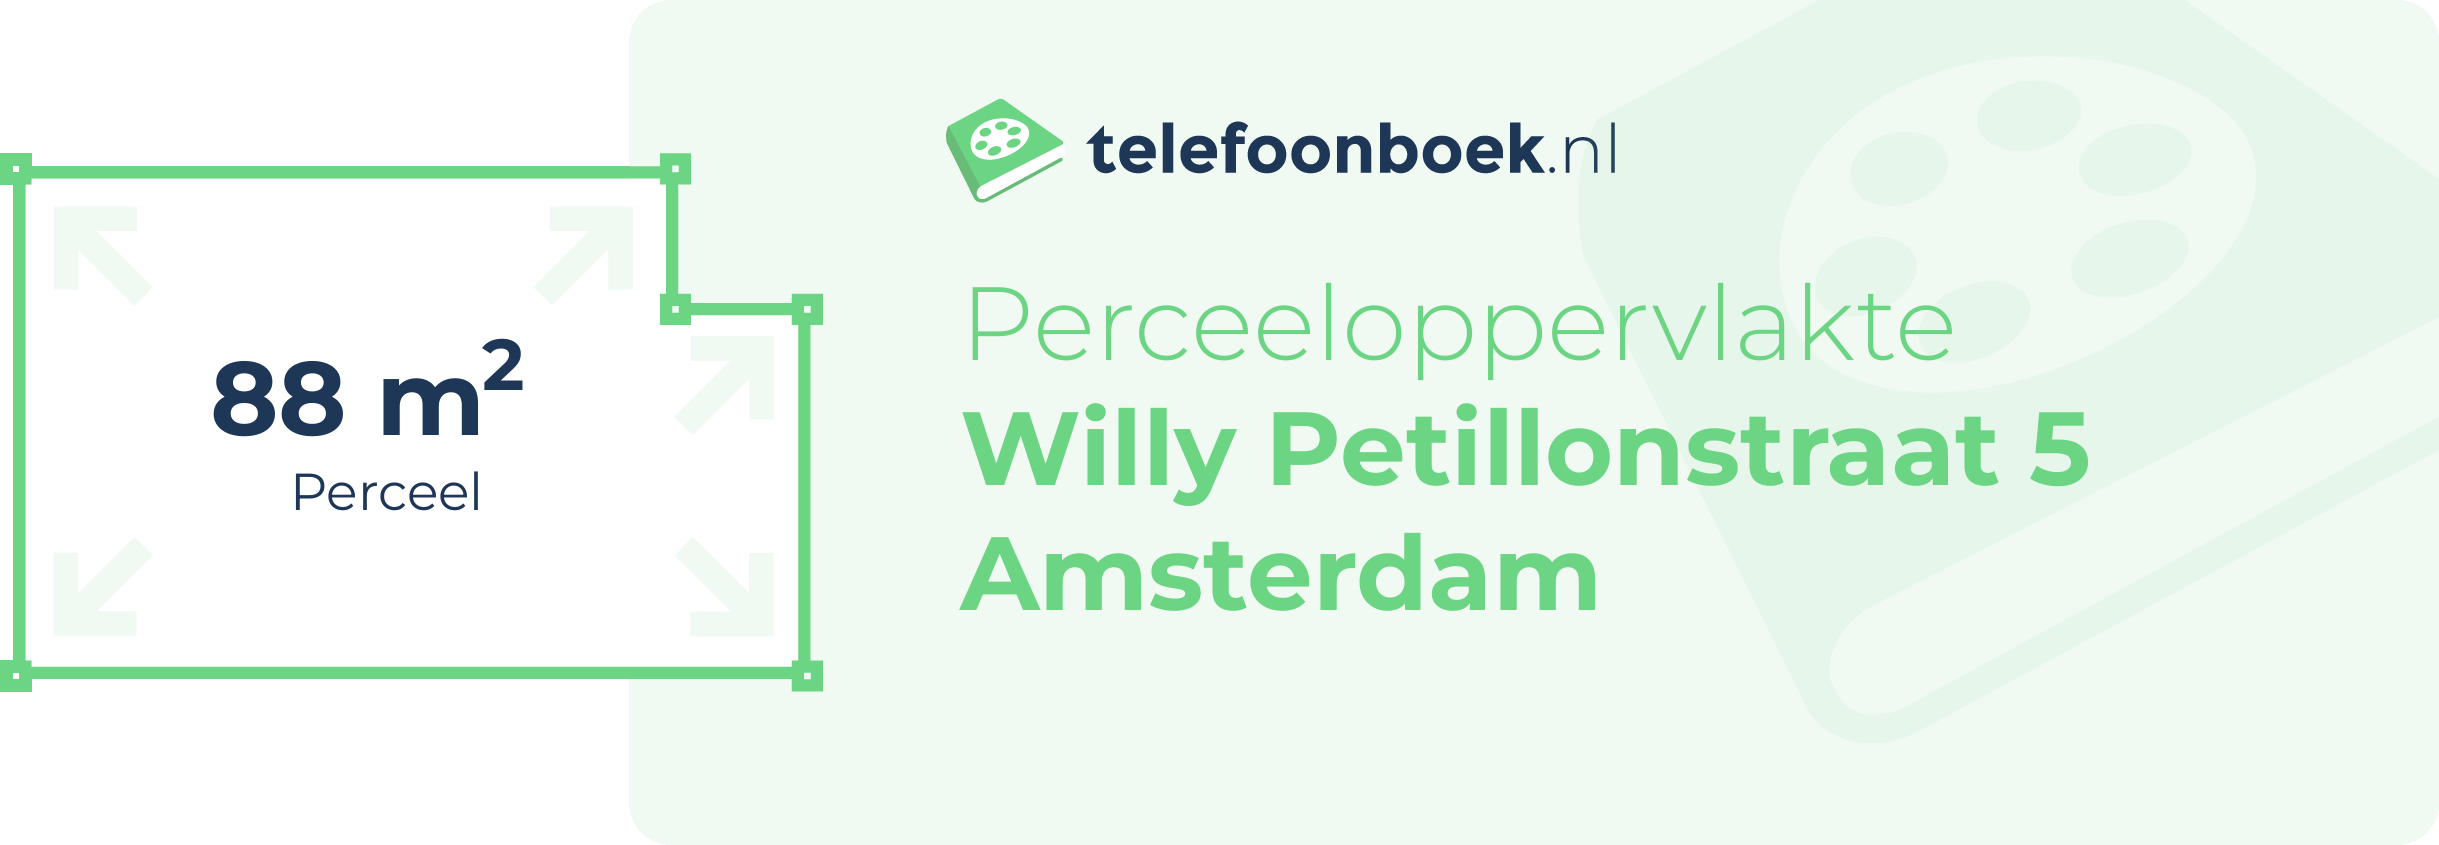 Perceeloppervlakte Willy Petillonstraat 5 Amsterdam